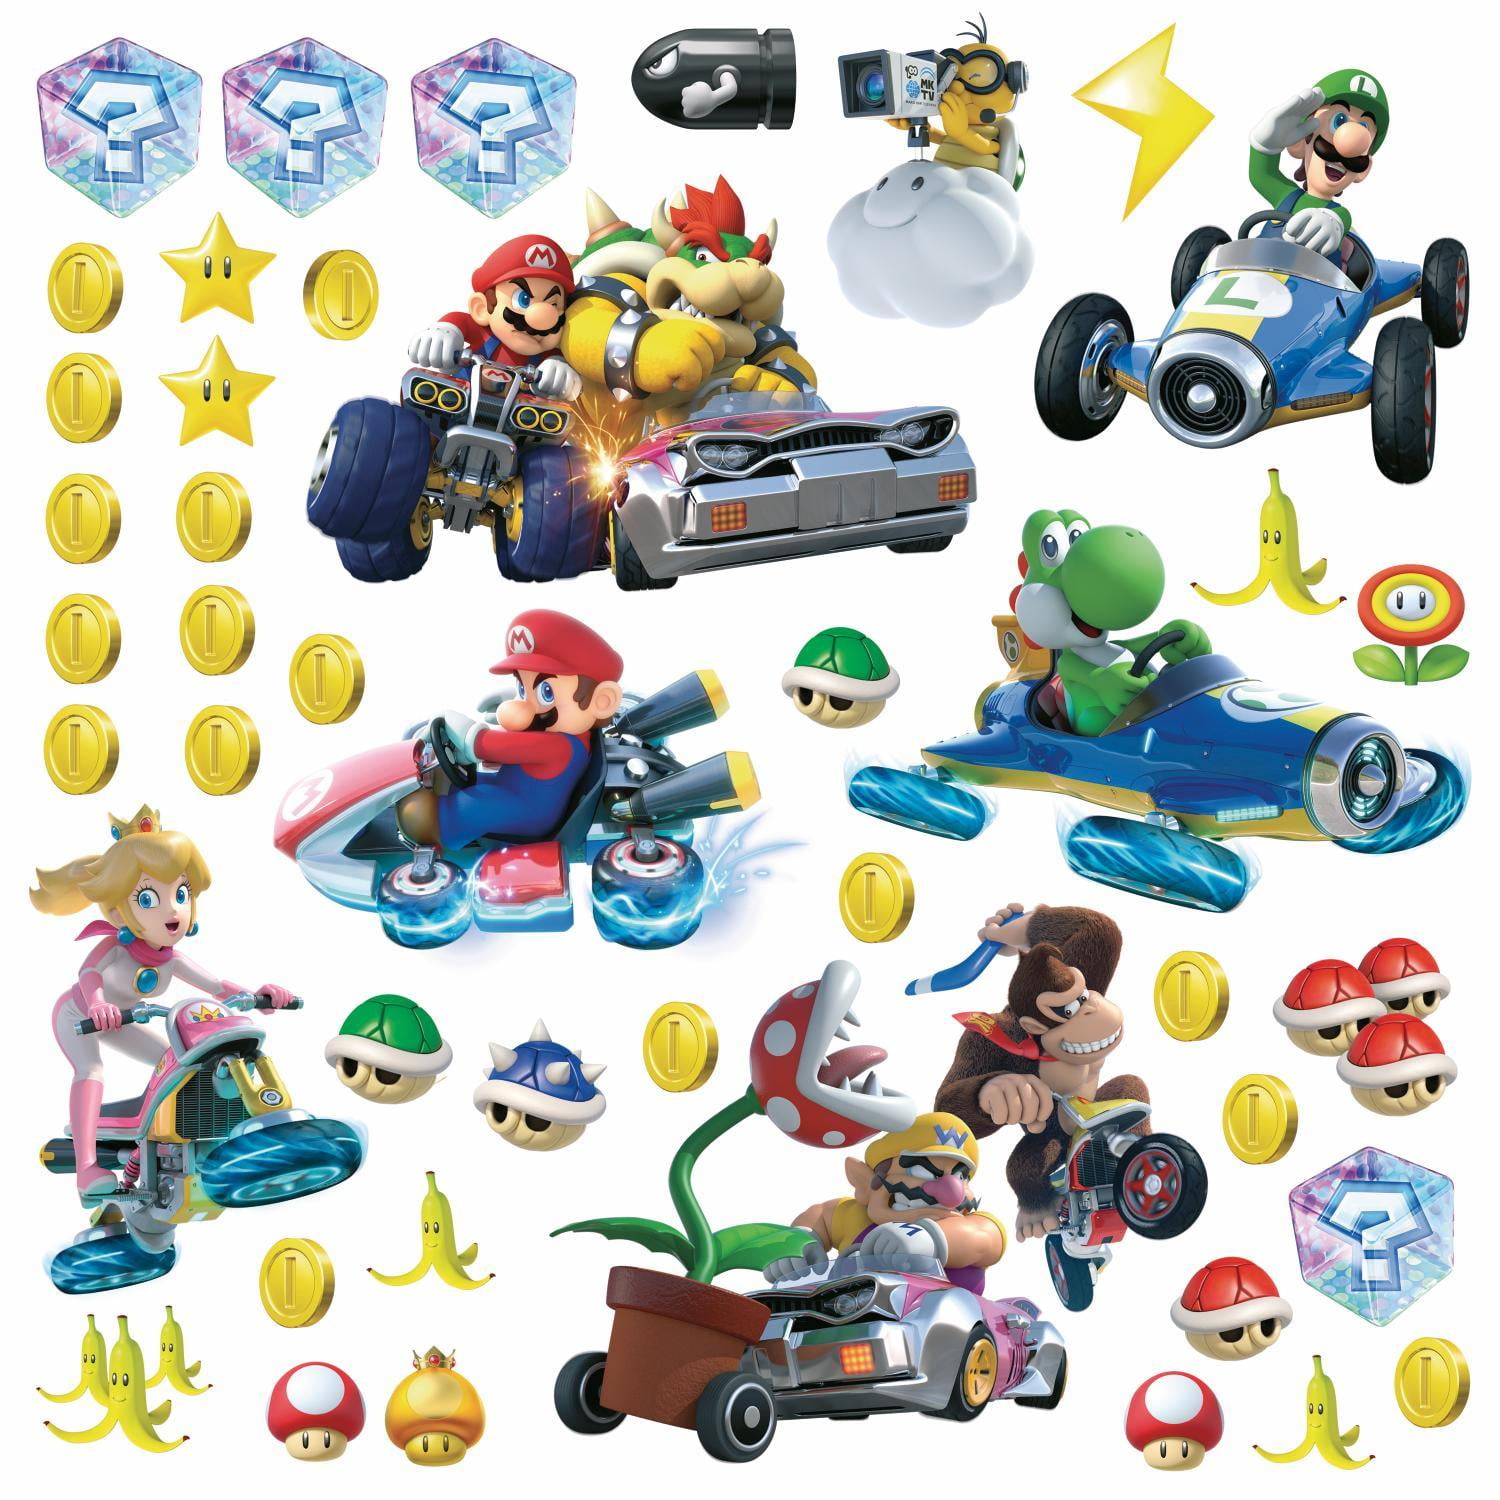 LUIGI RACE CAR Super Mario Bros Decal WALL STICKER Decor Art Kart Mural 